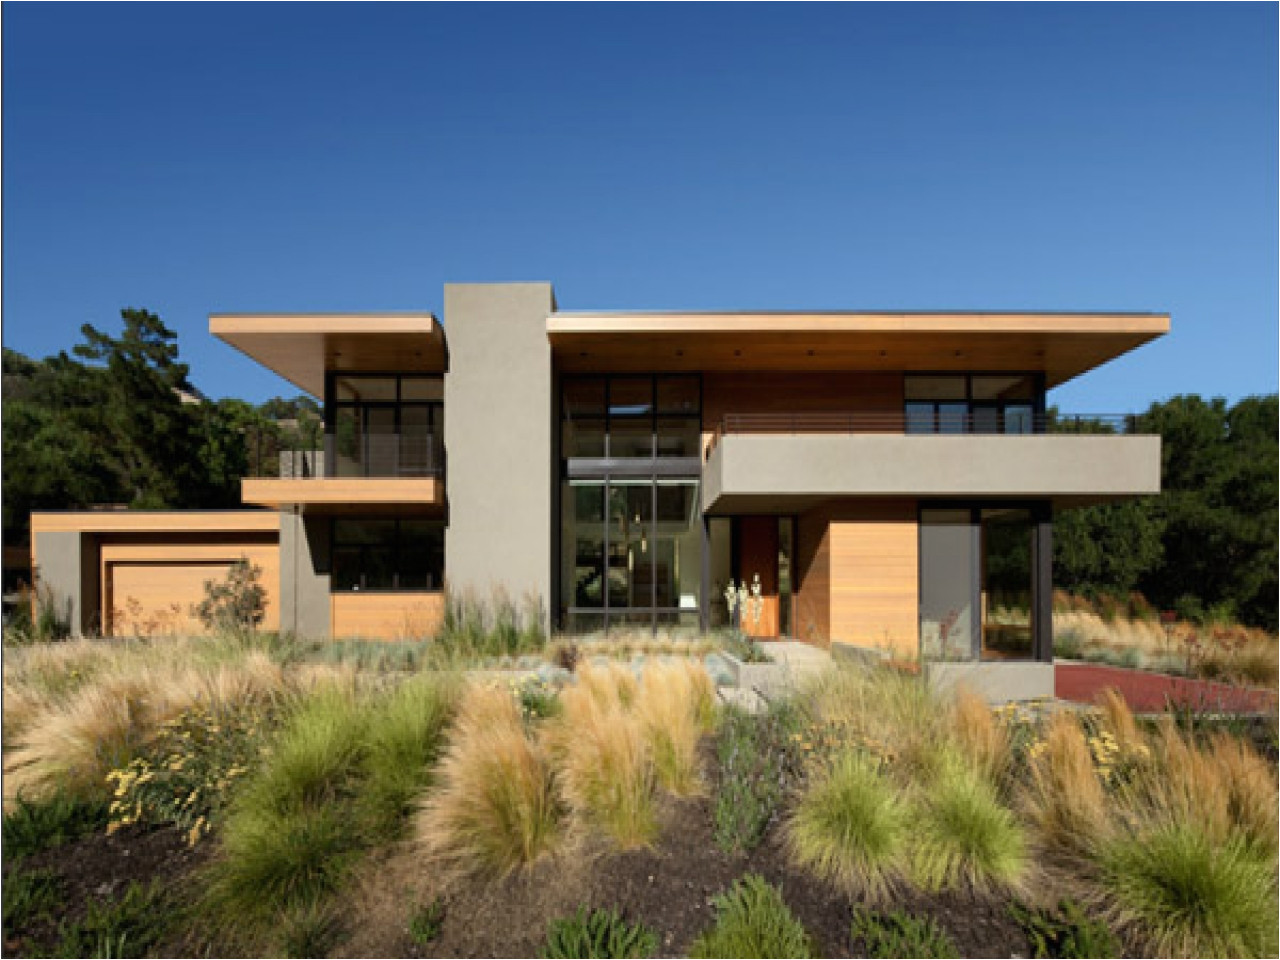 california modern home plans that klas holm